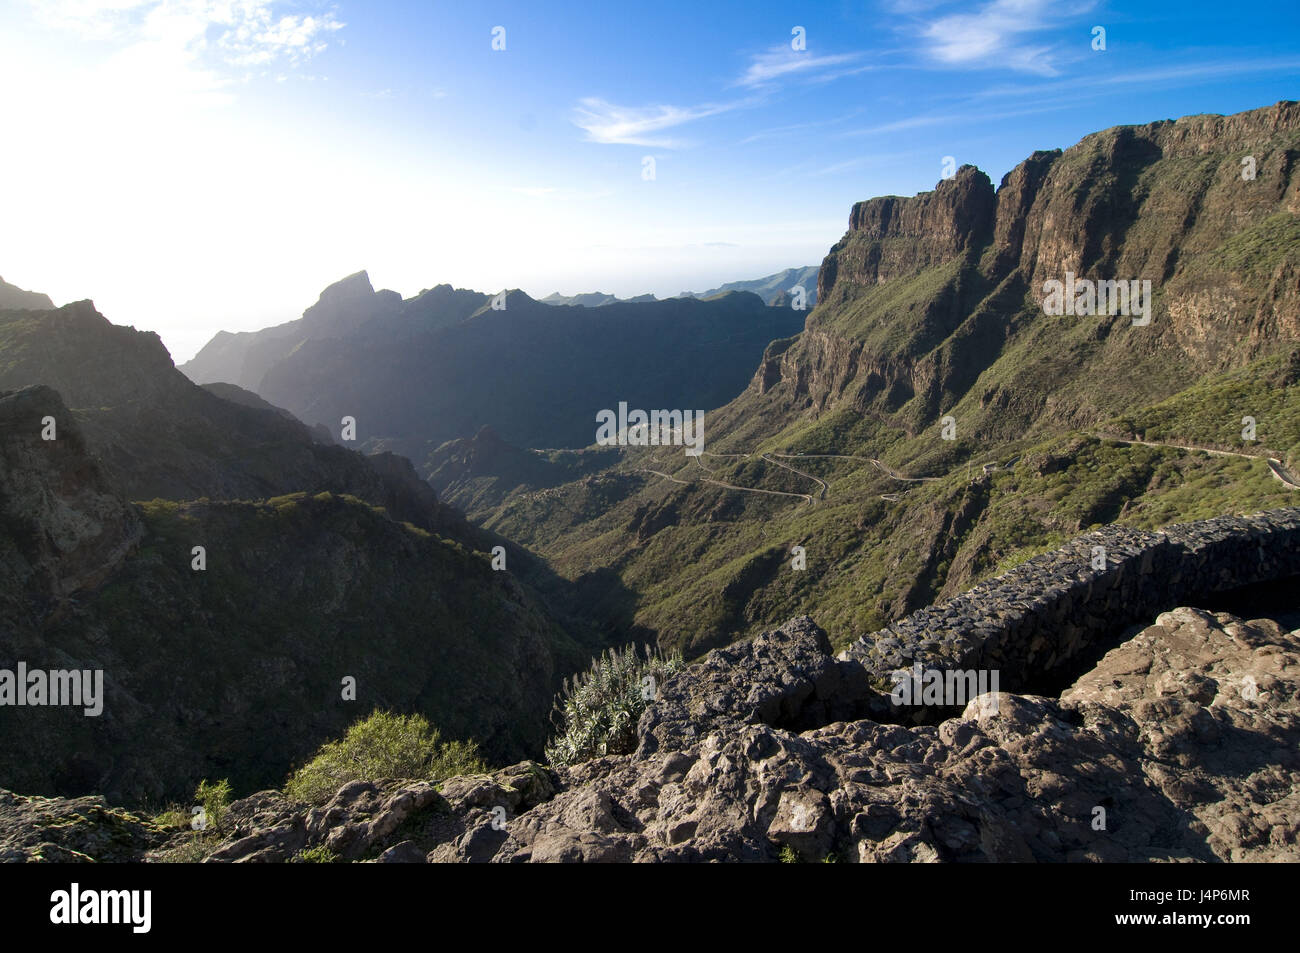 Spain, the Canaries, island Tenerife, mountain village of Masca, mountain landscape, Stock Photo